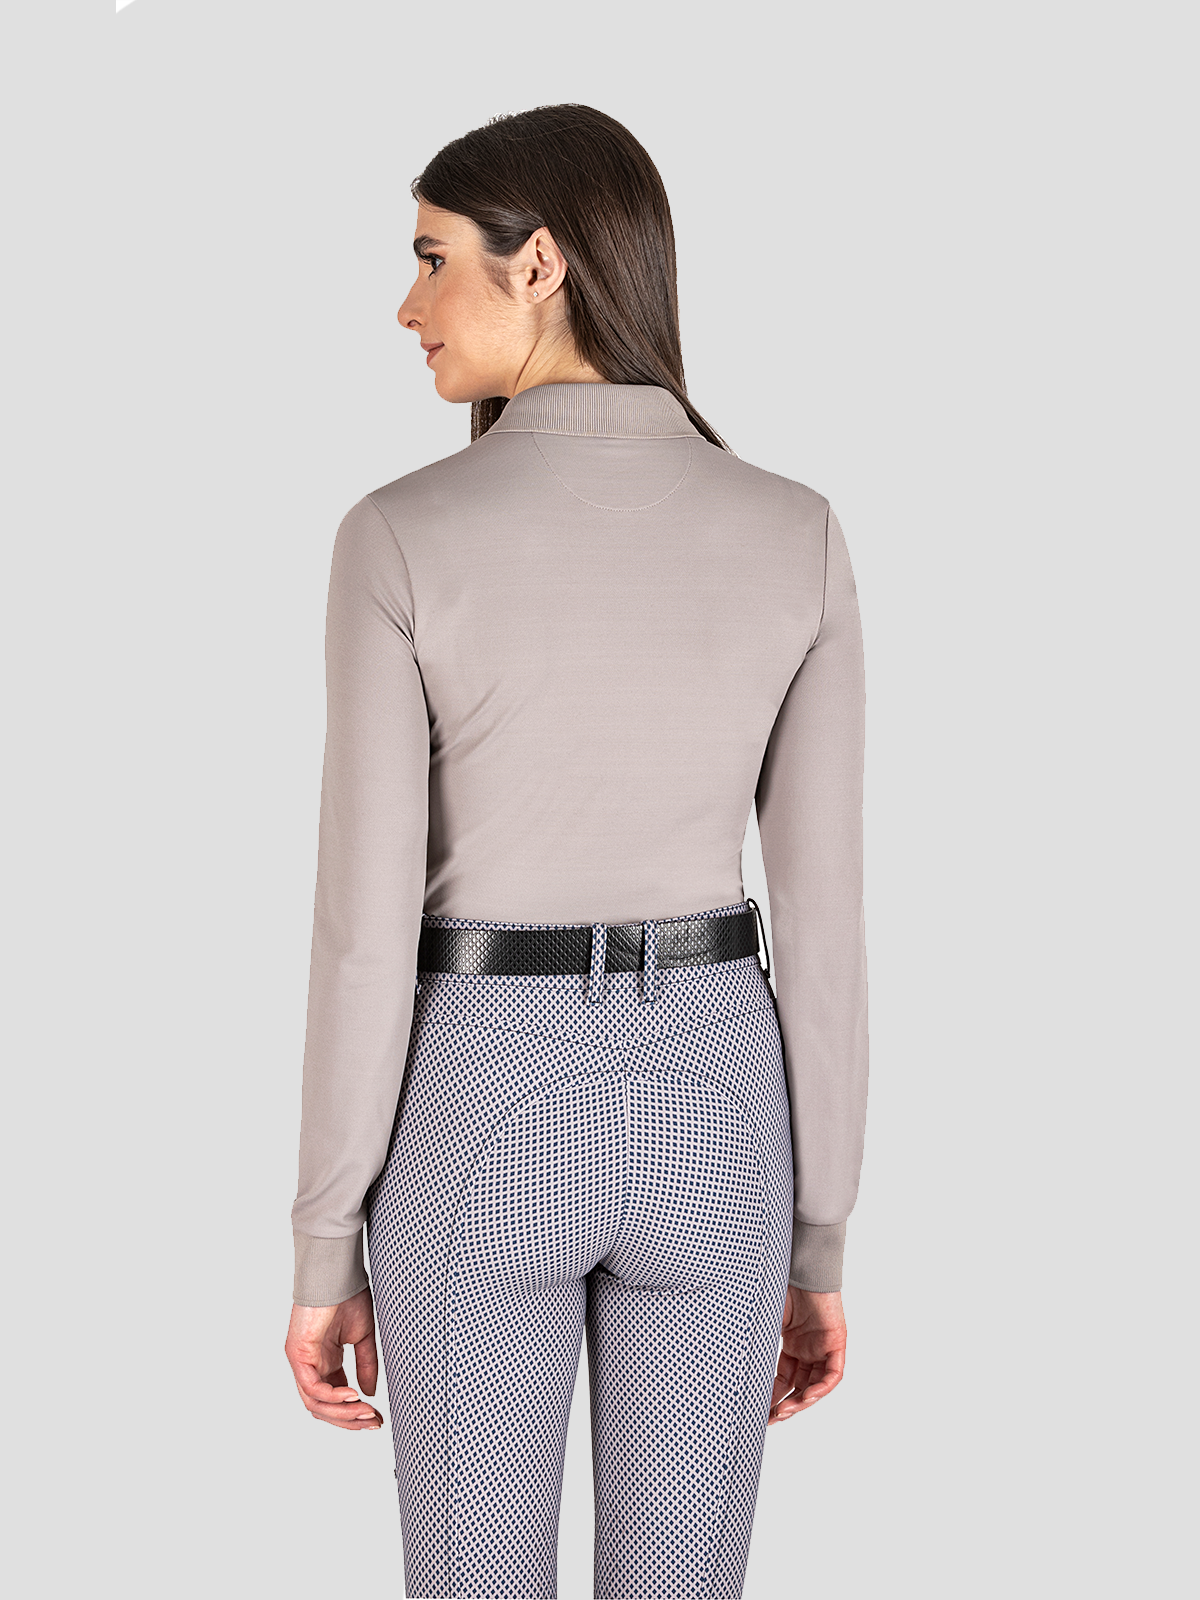 Evae Long Sleeve Women's Polo Shirt - rear view